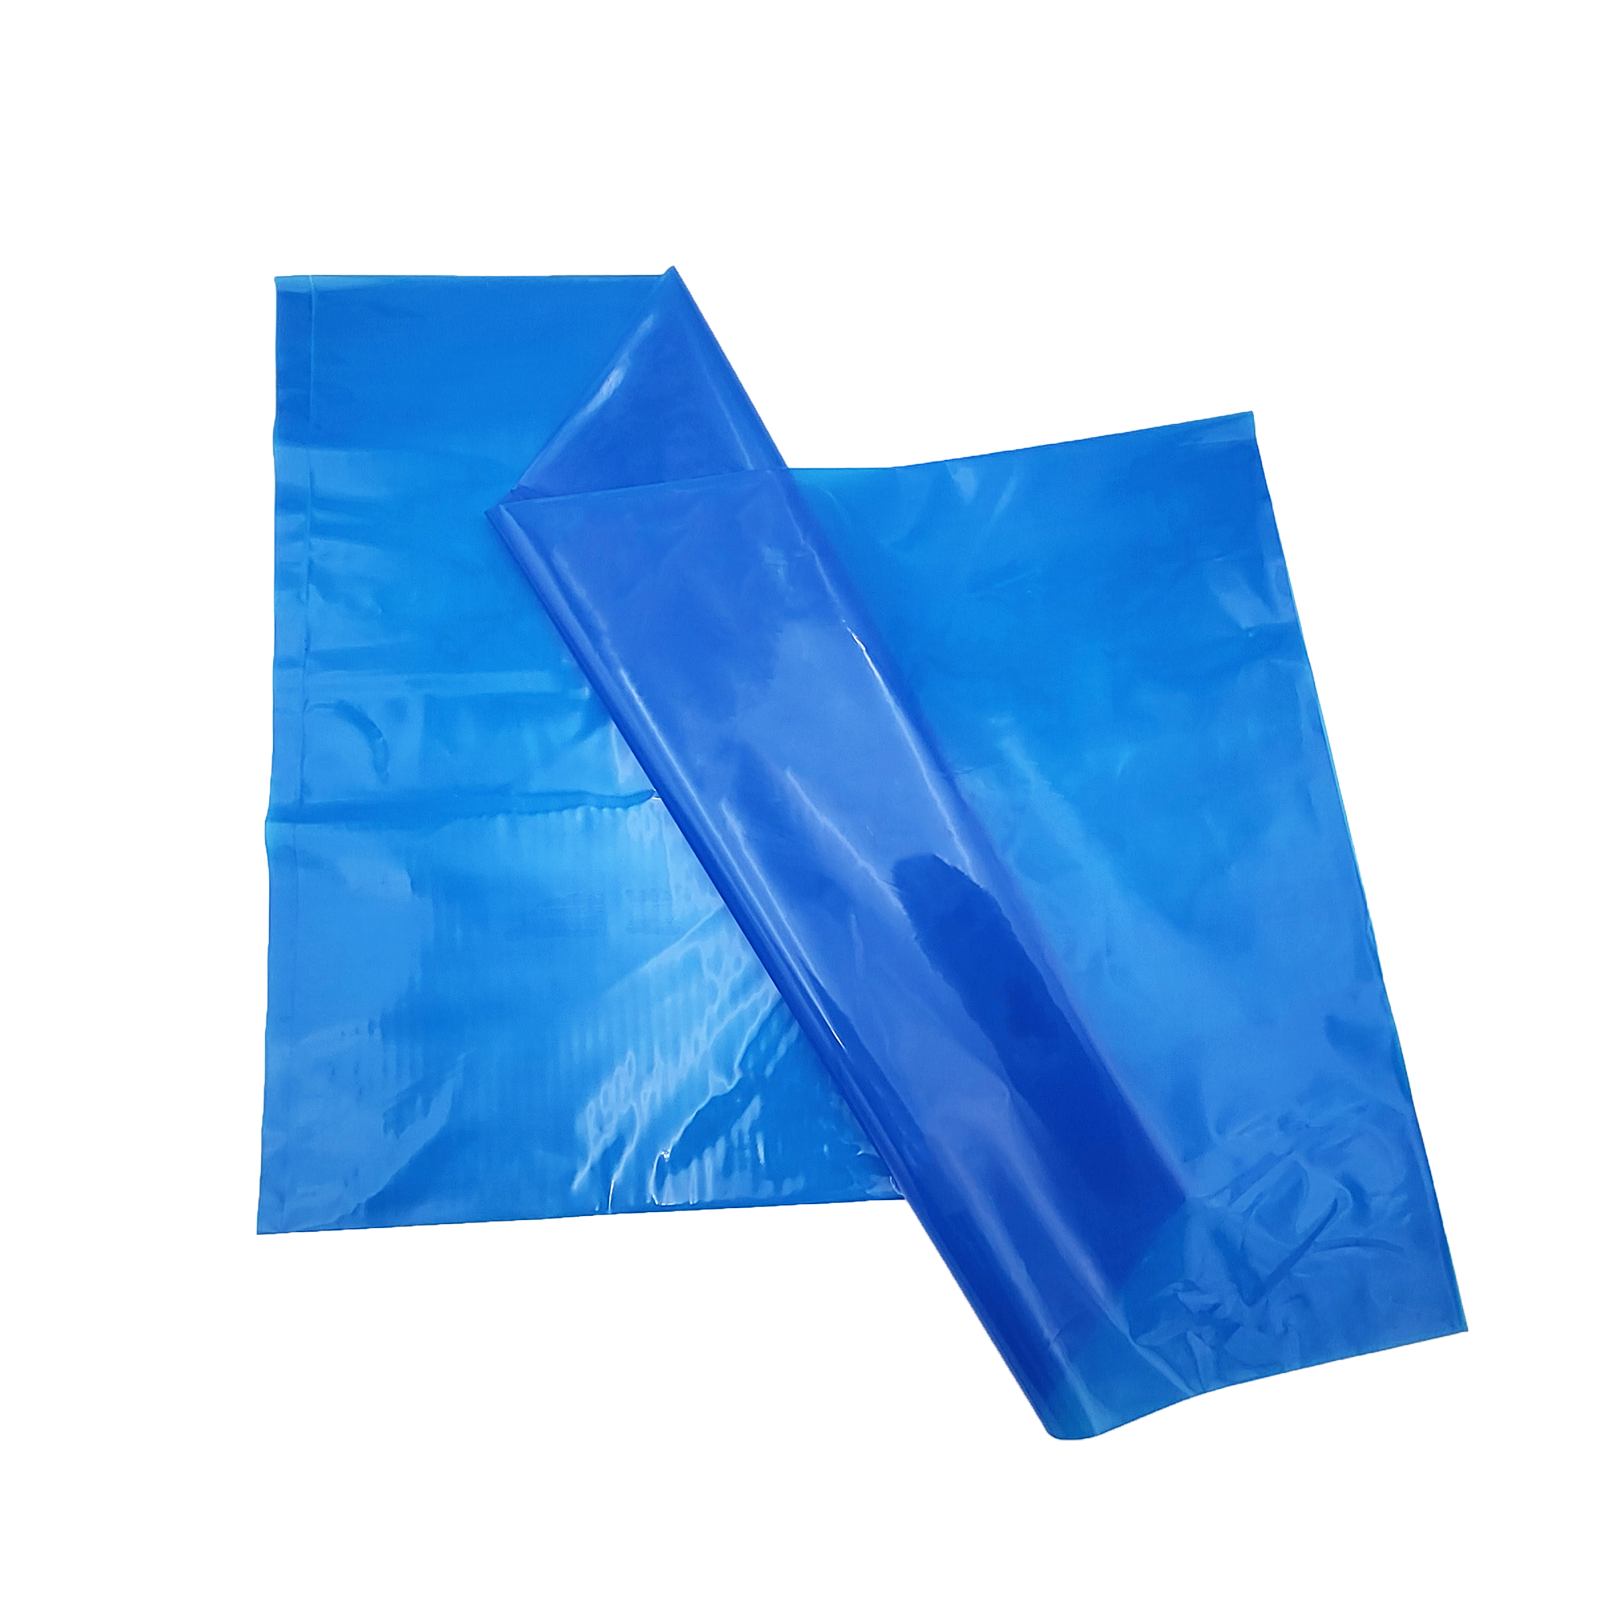 LDPE Polythene Bags - Blue - 450mm x 760mm x 50um, Ctn of 300 - LDPE ...